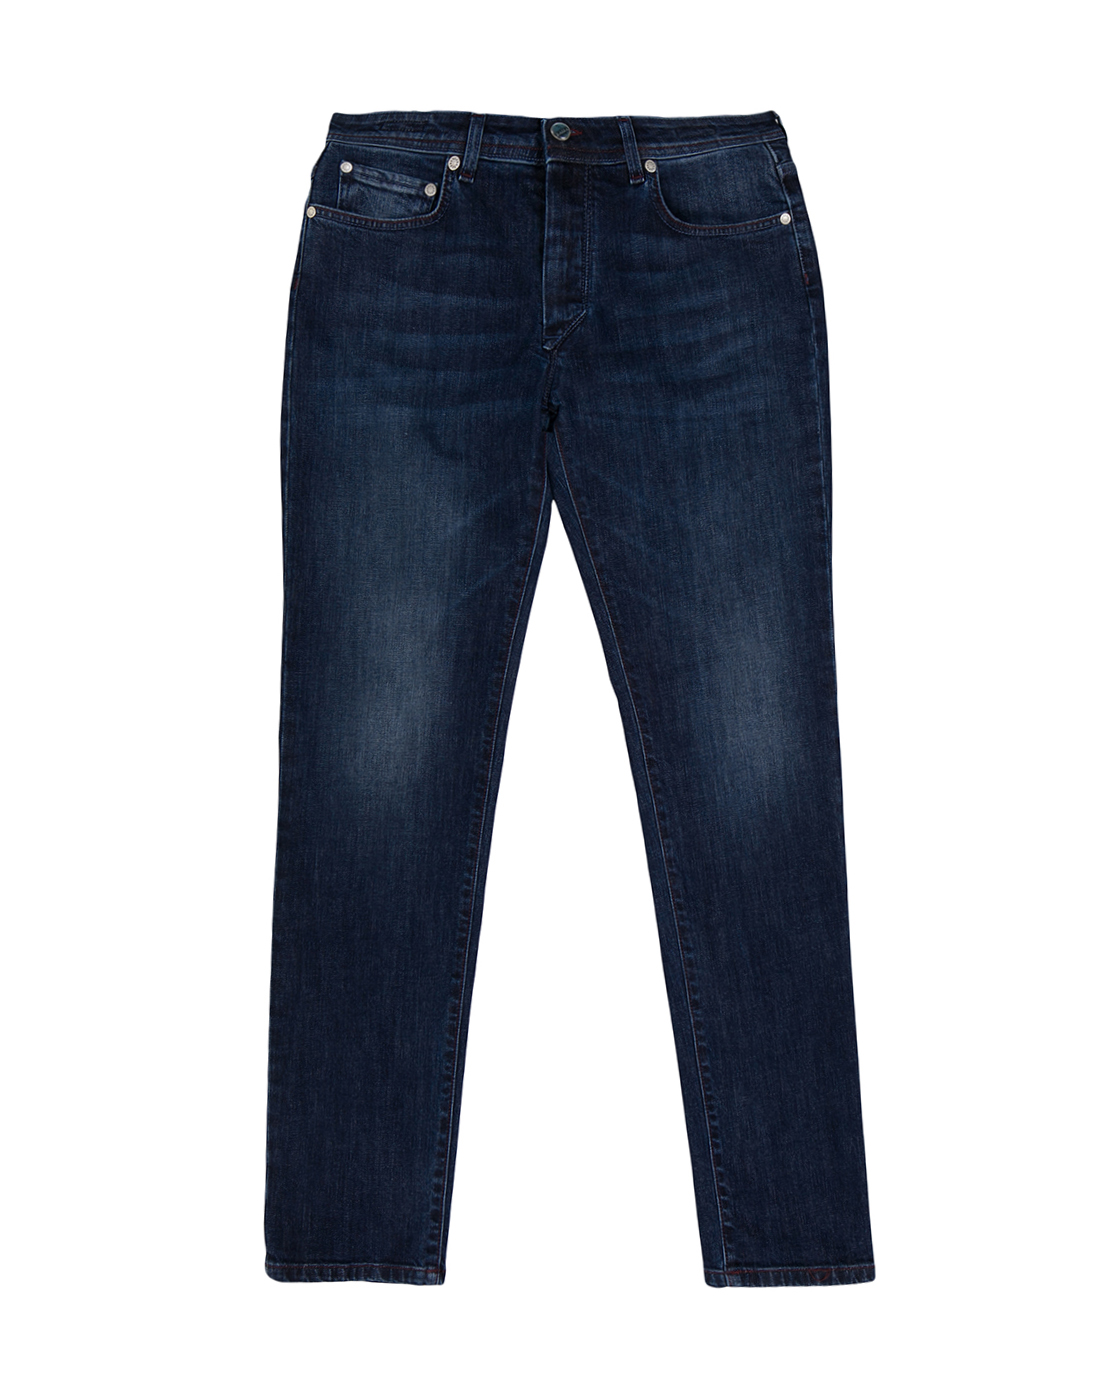 Мужские синие джинсы Barba SJFIVE 14431-1